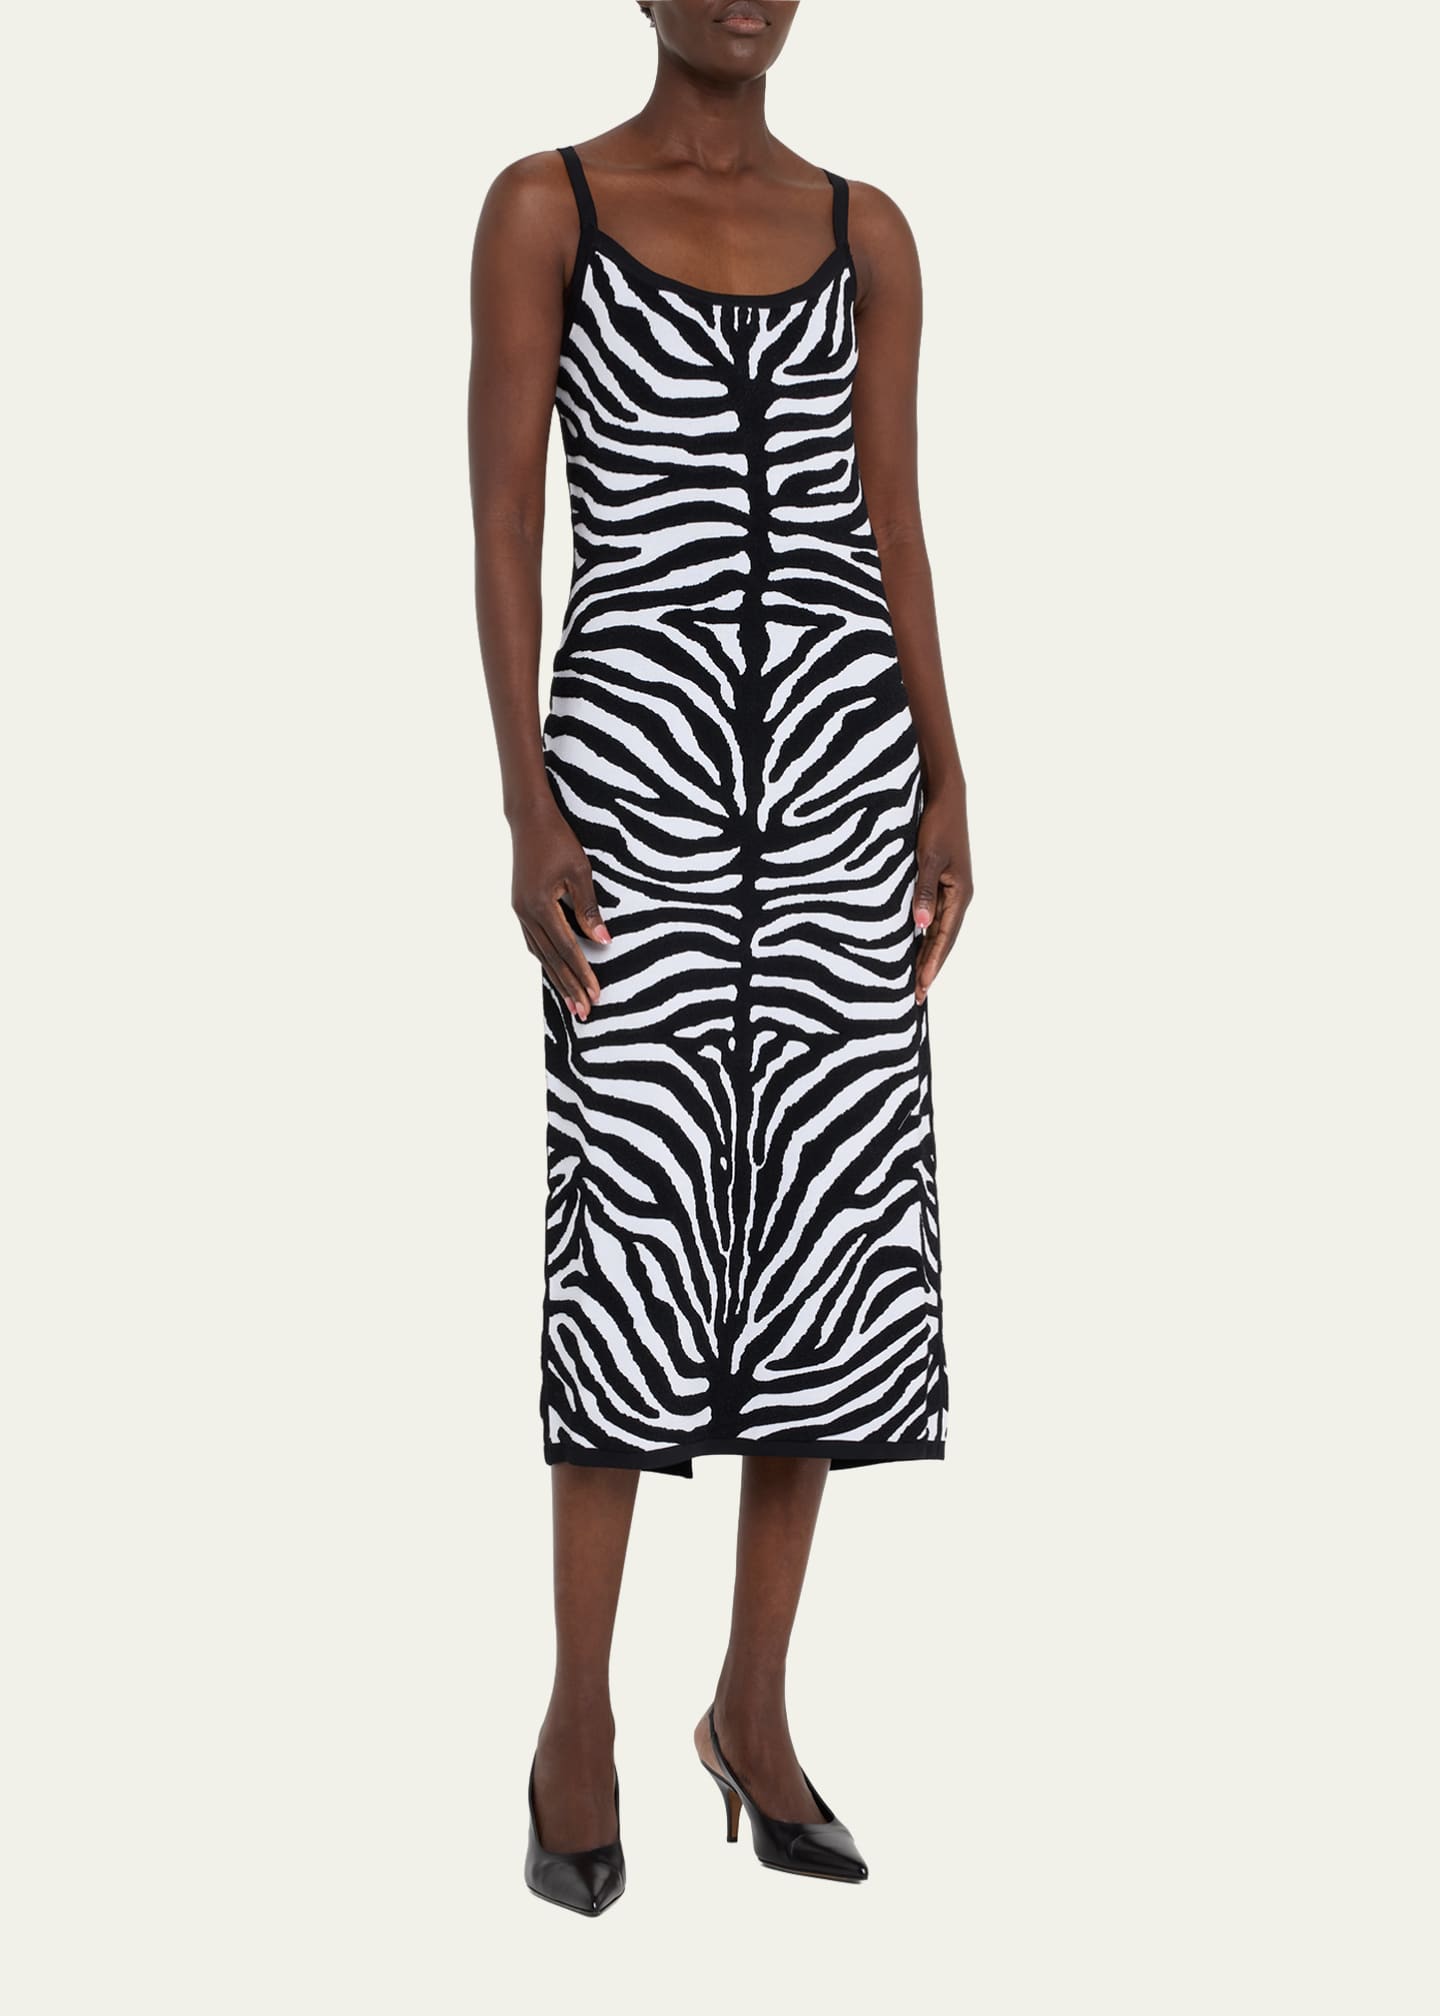 Michael Kors Collection Zebra Print Sheath Dress - Bergdorf Goodman